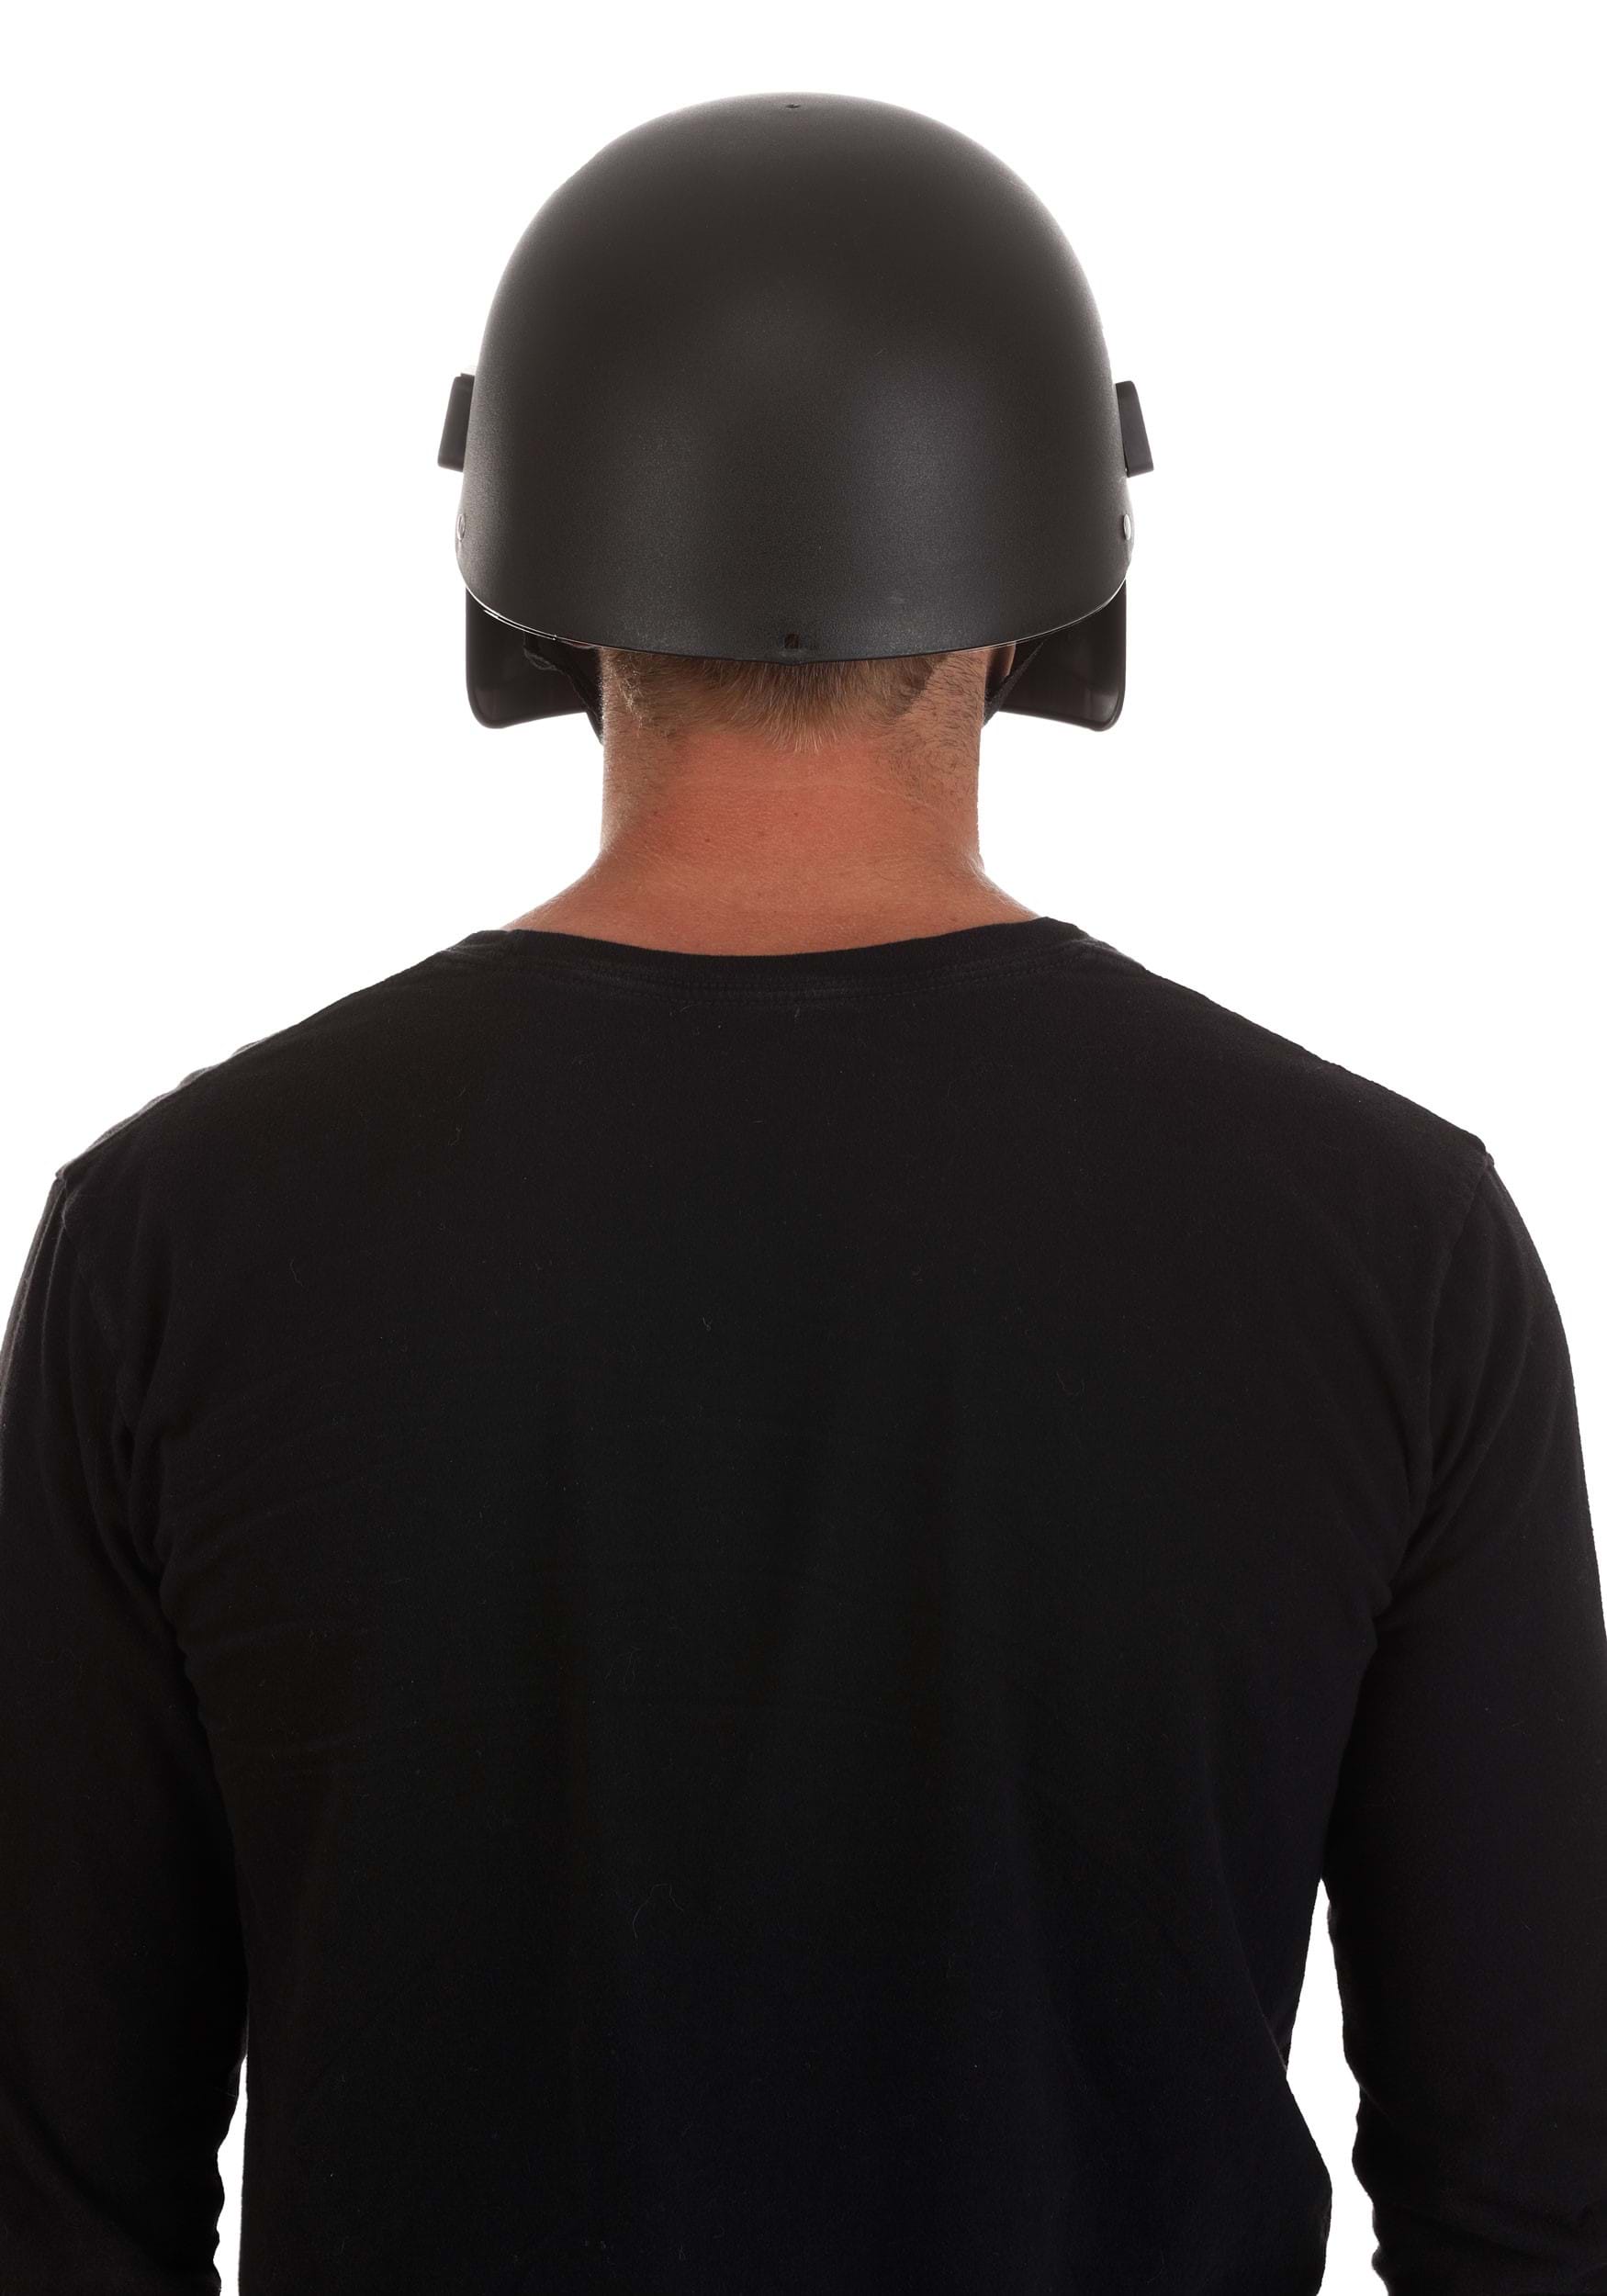 SWAT Fancy Dress Costume Visor Adult Helmet